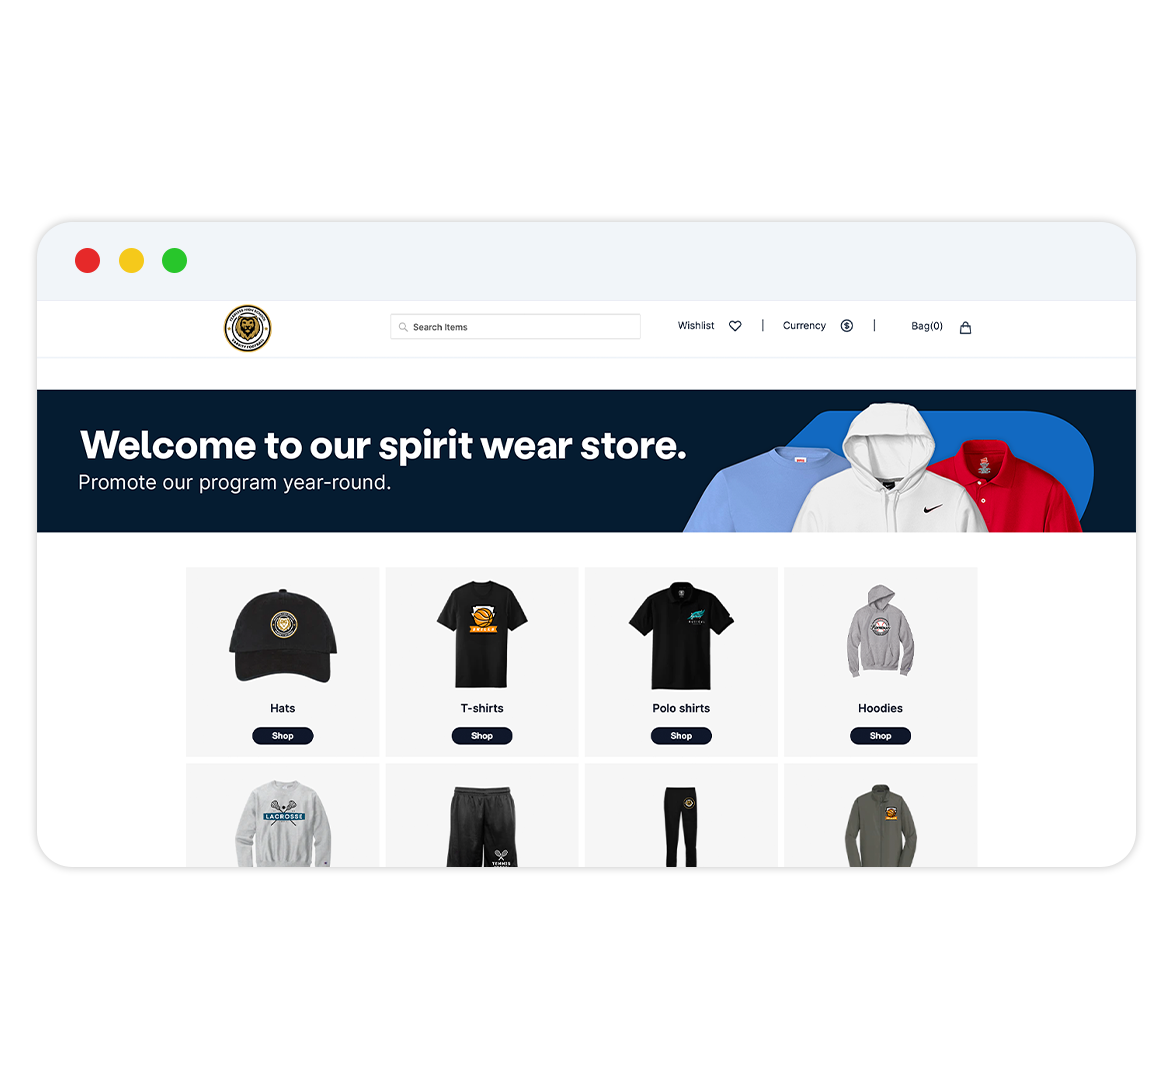 Snap! Store sample storefront webpage